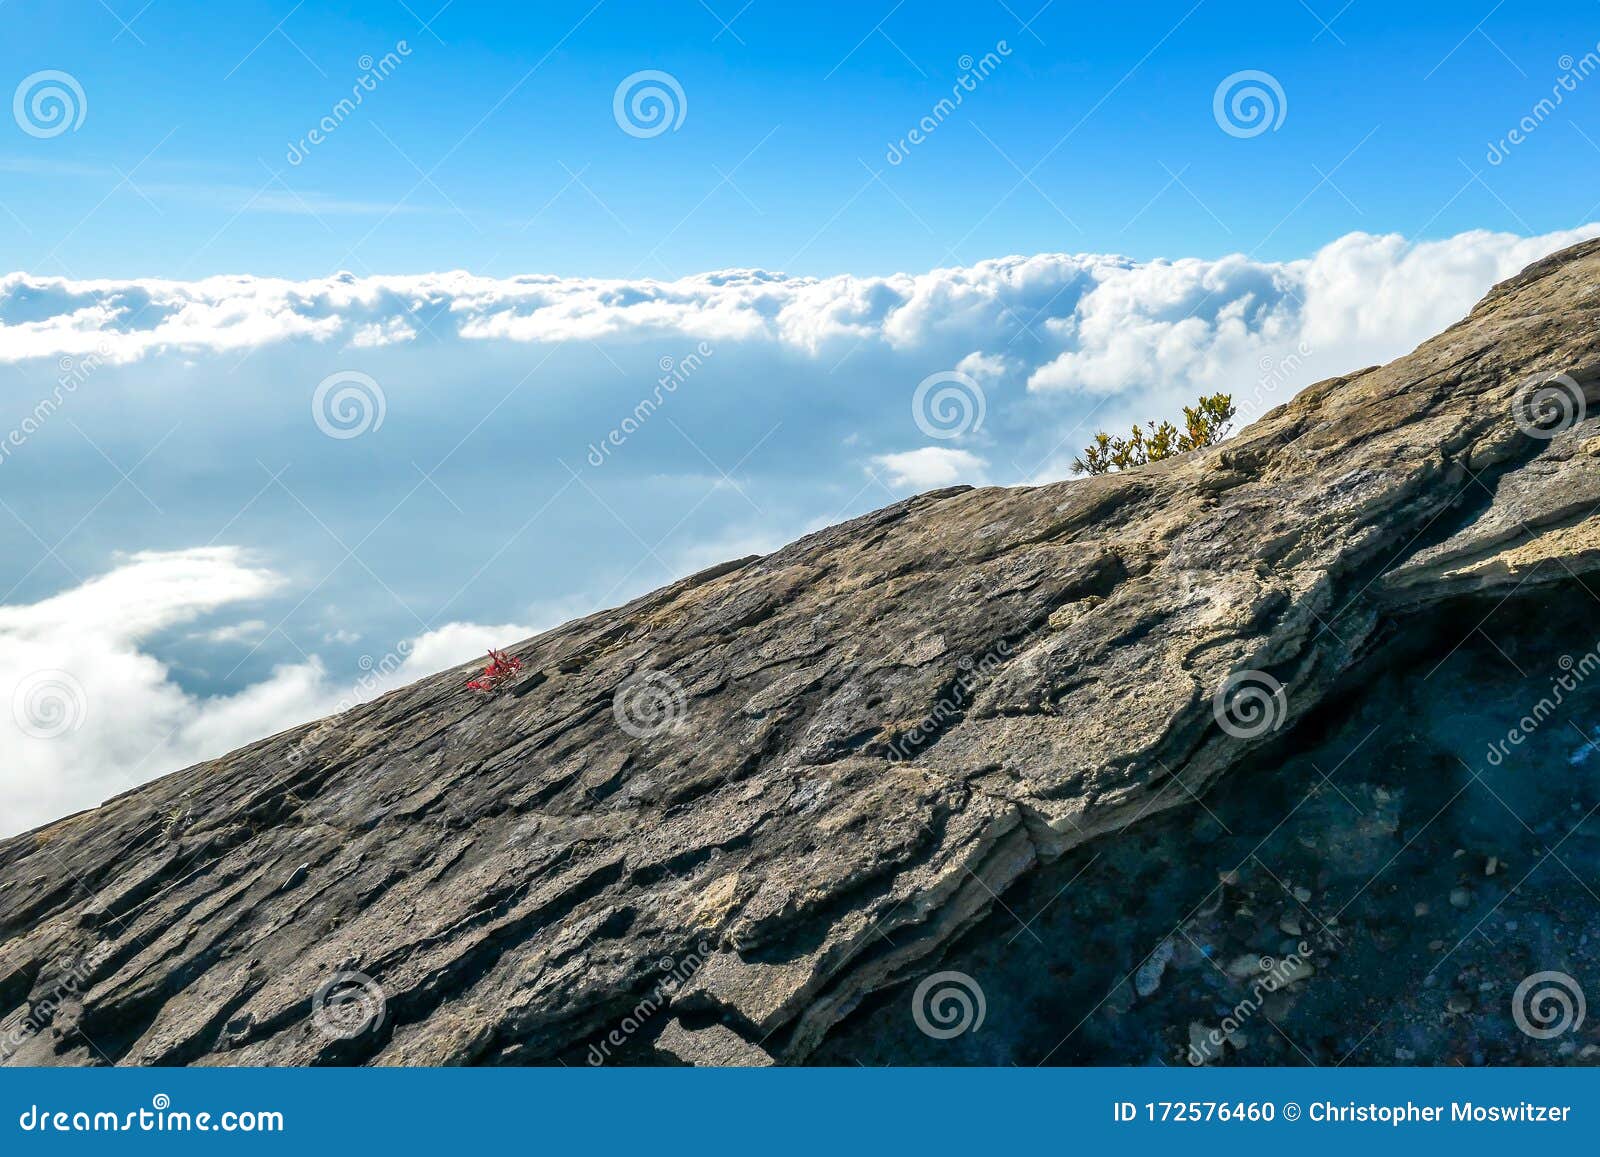 bajawa - steep slopes of volcano inierie